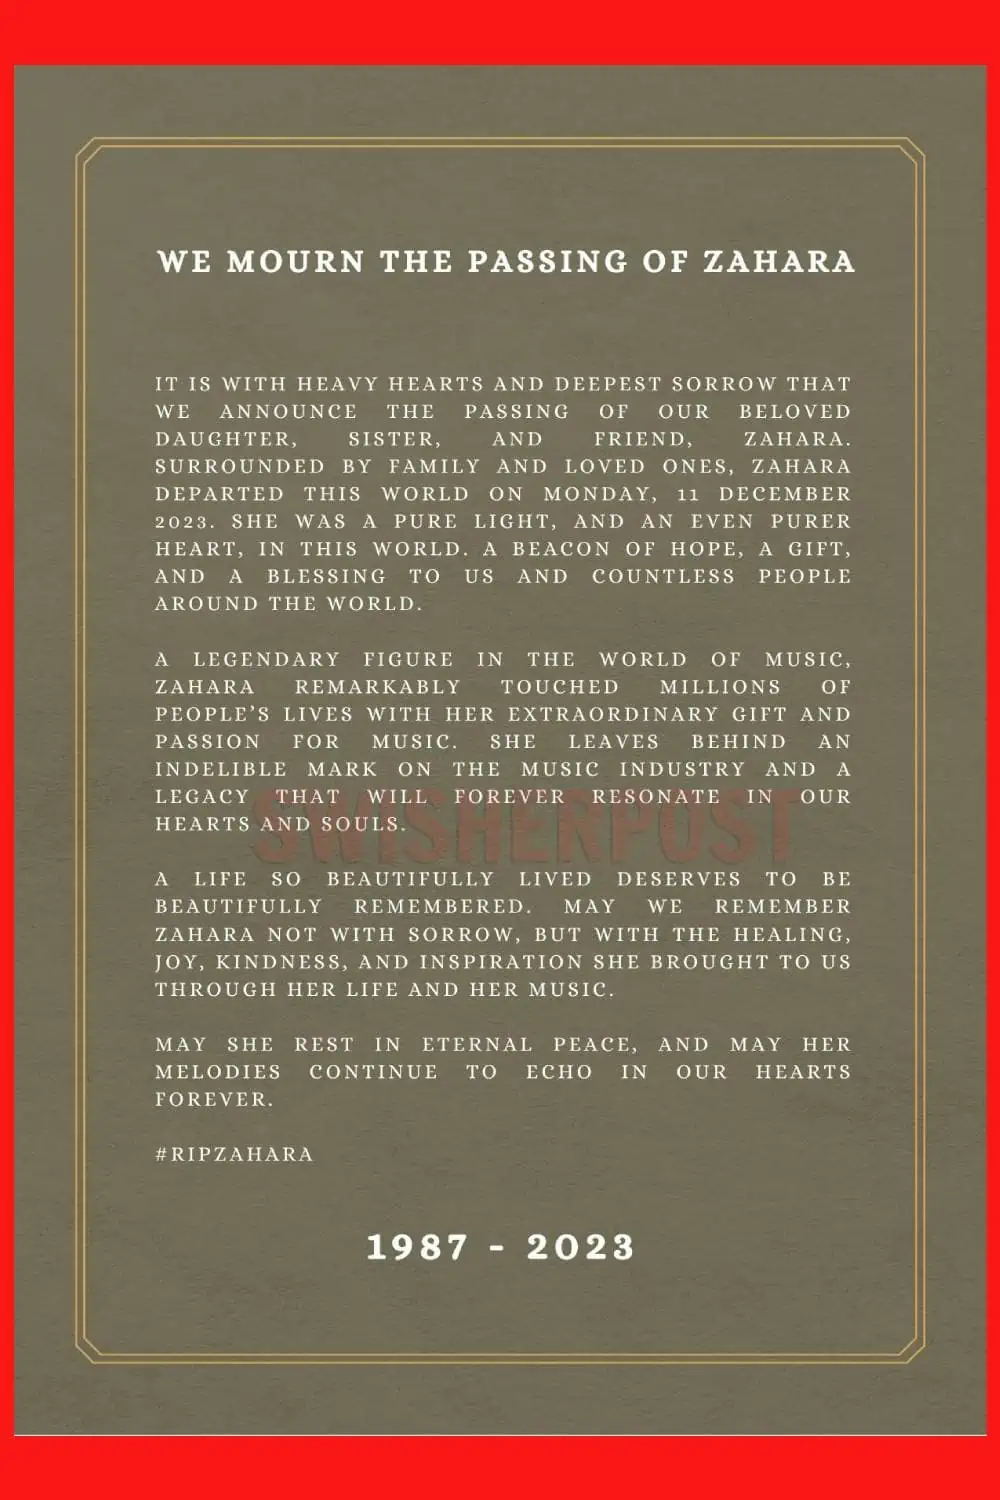 zahara funeral memorial service family statement